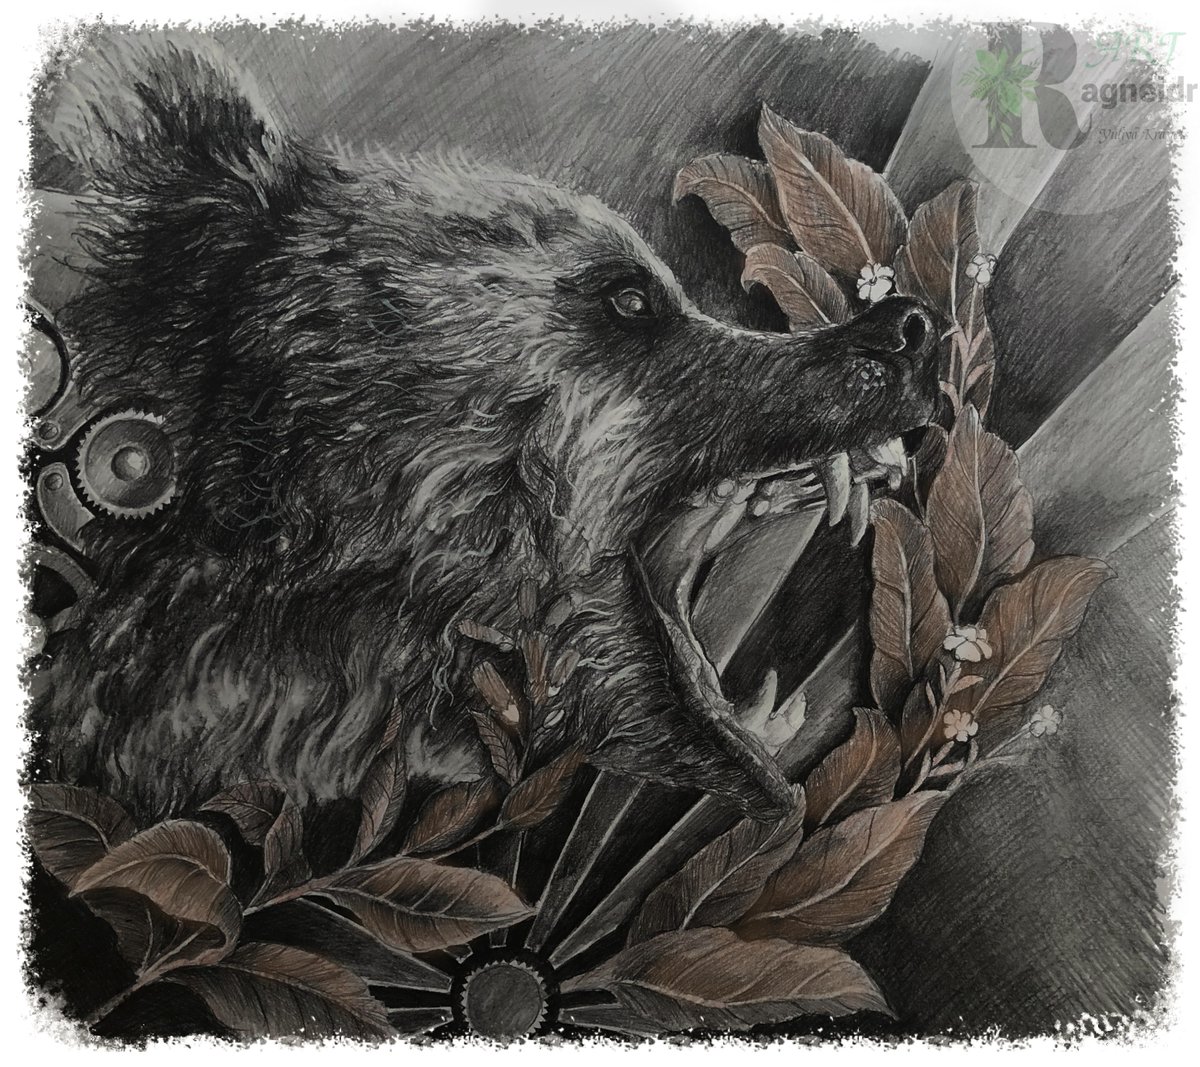 smoking bear , mу art, 297×420 , pencil drawing, 2022
instagram.com/artragneidr/
#instaart #artist #artoftheday. #fabercastell #logotype     #tobacco #cigarettes #bear #animals #blackbear #animalism #animalslife